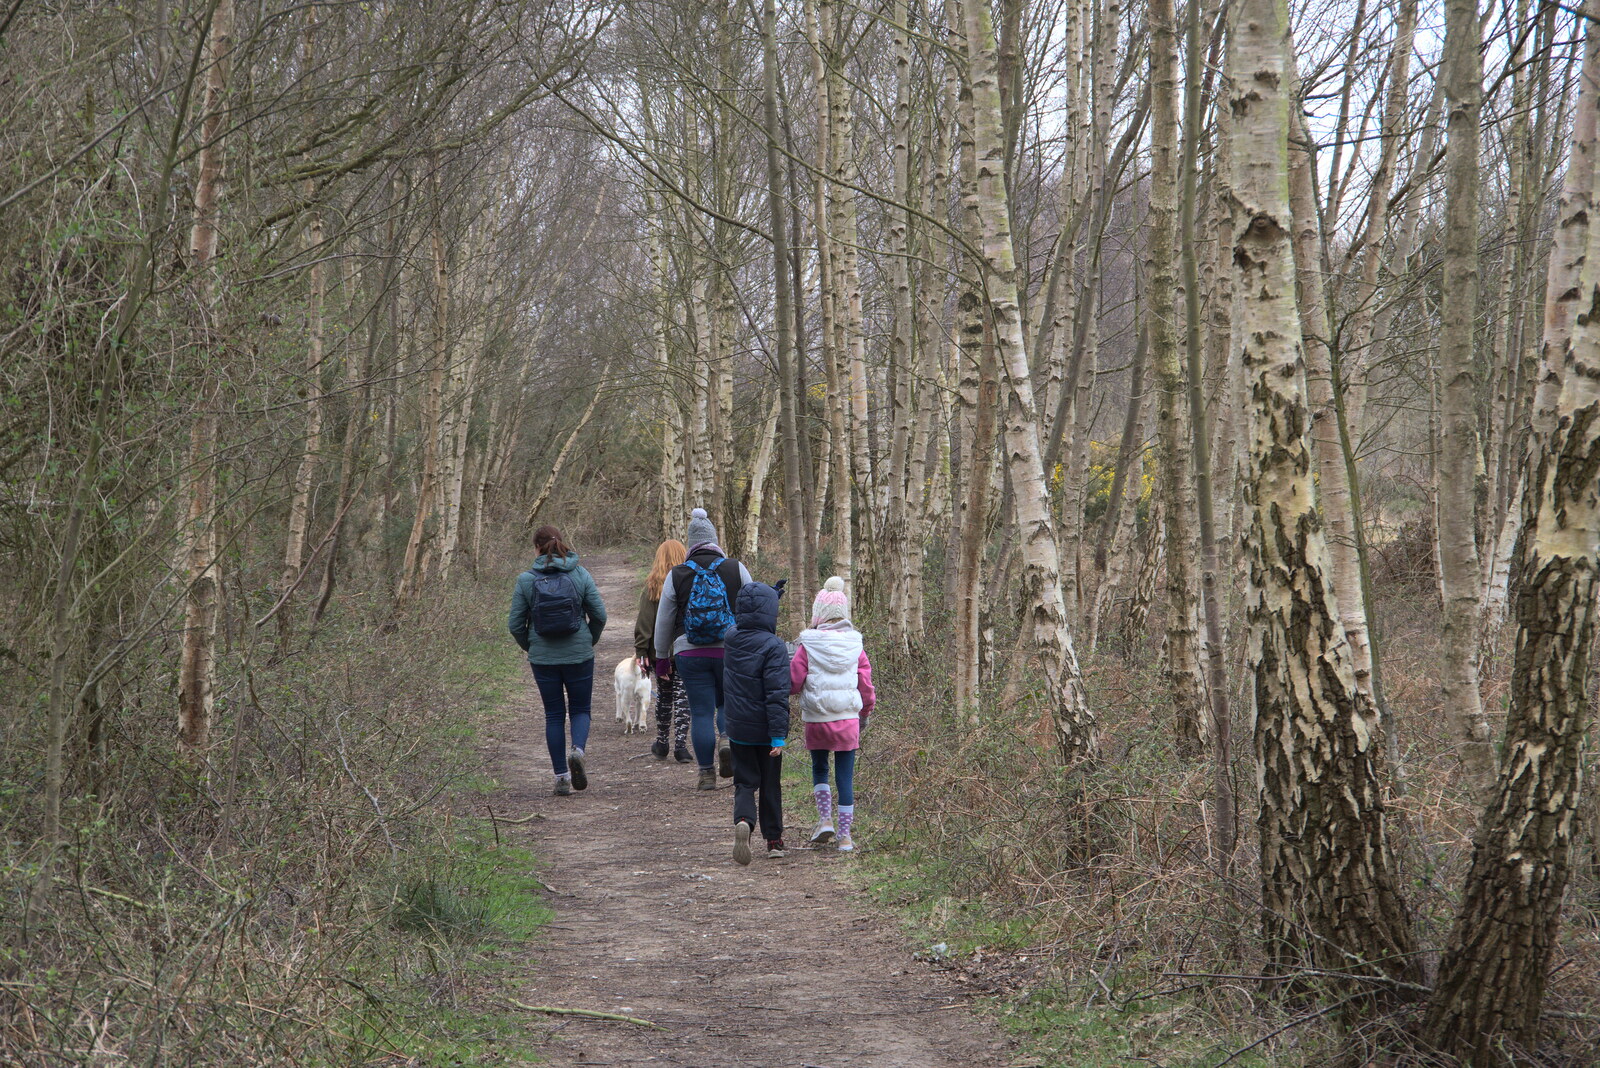 Walking through silver birch trees from A Trip to Dunwich Beach, Dunwich, Suffolk - 2nd April 2021